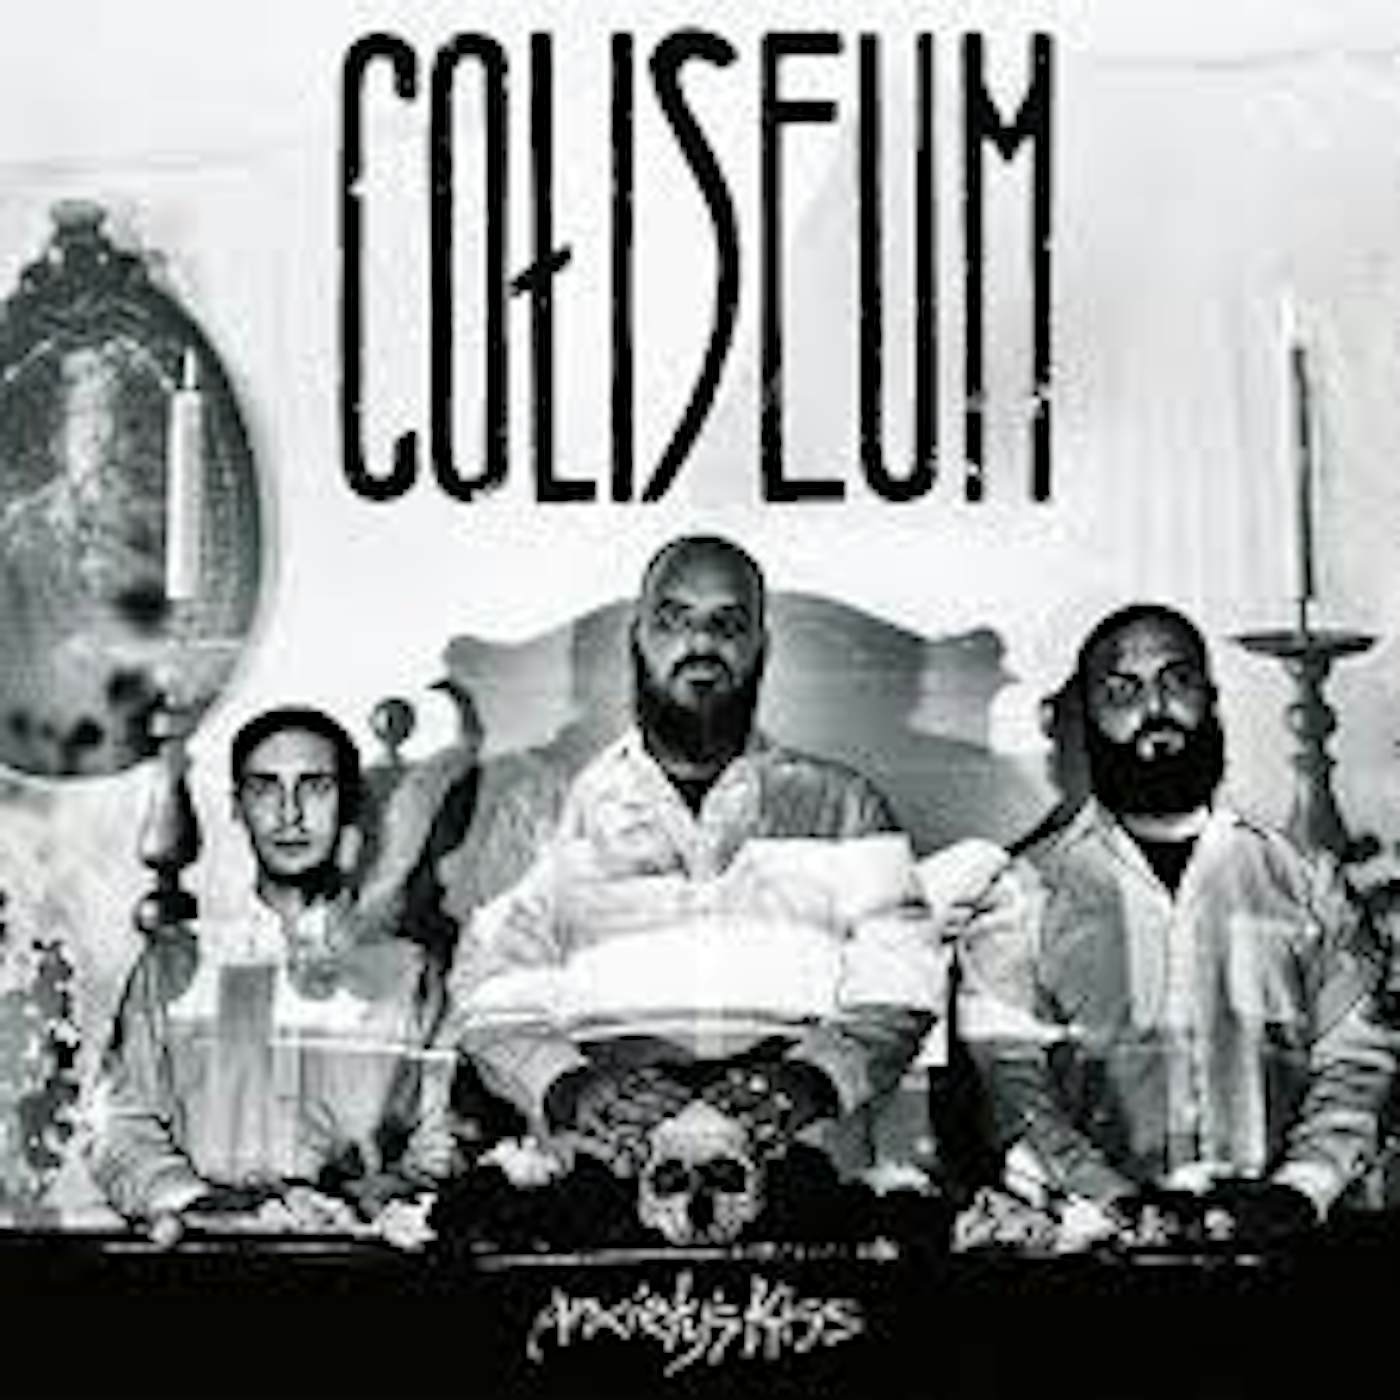 Coliseum ANXIETY'S KISS CD